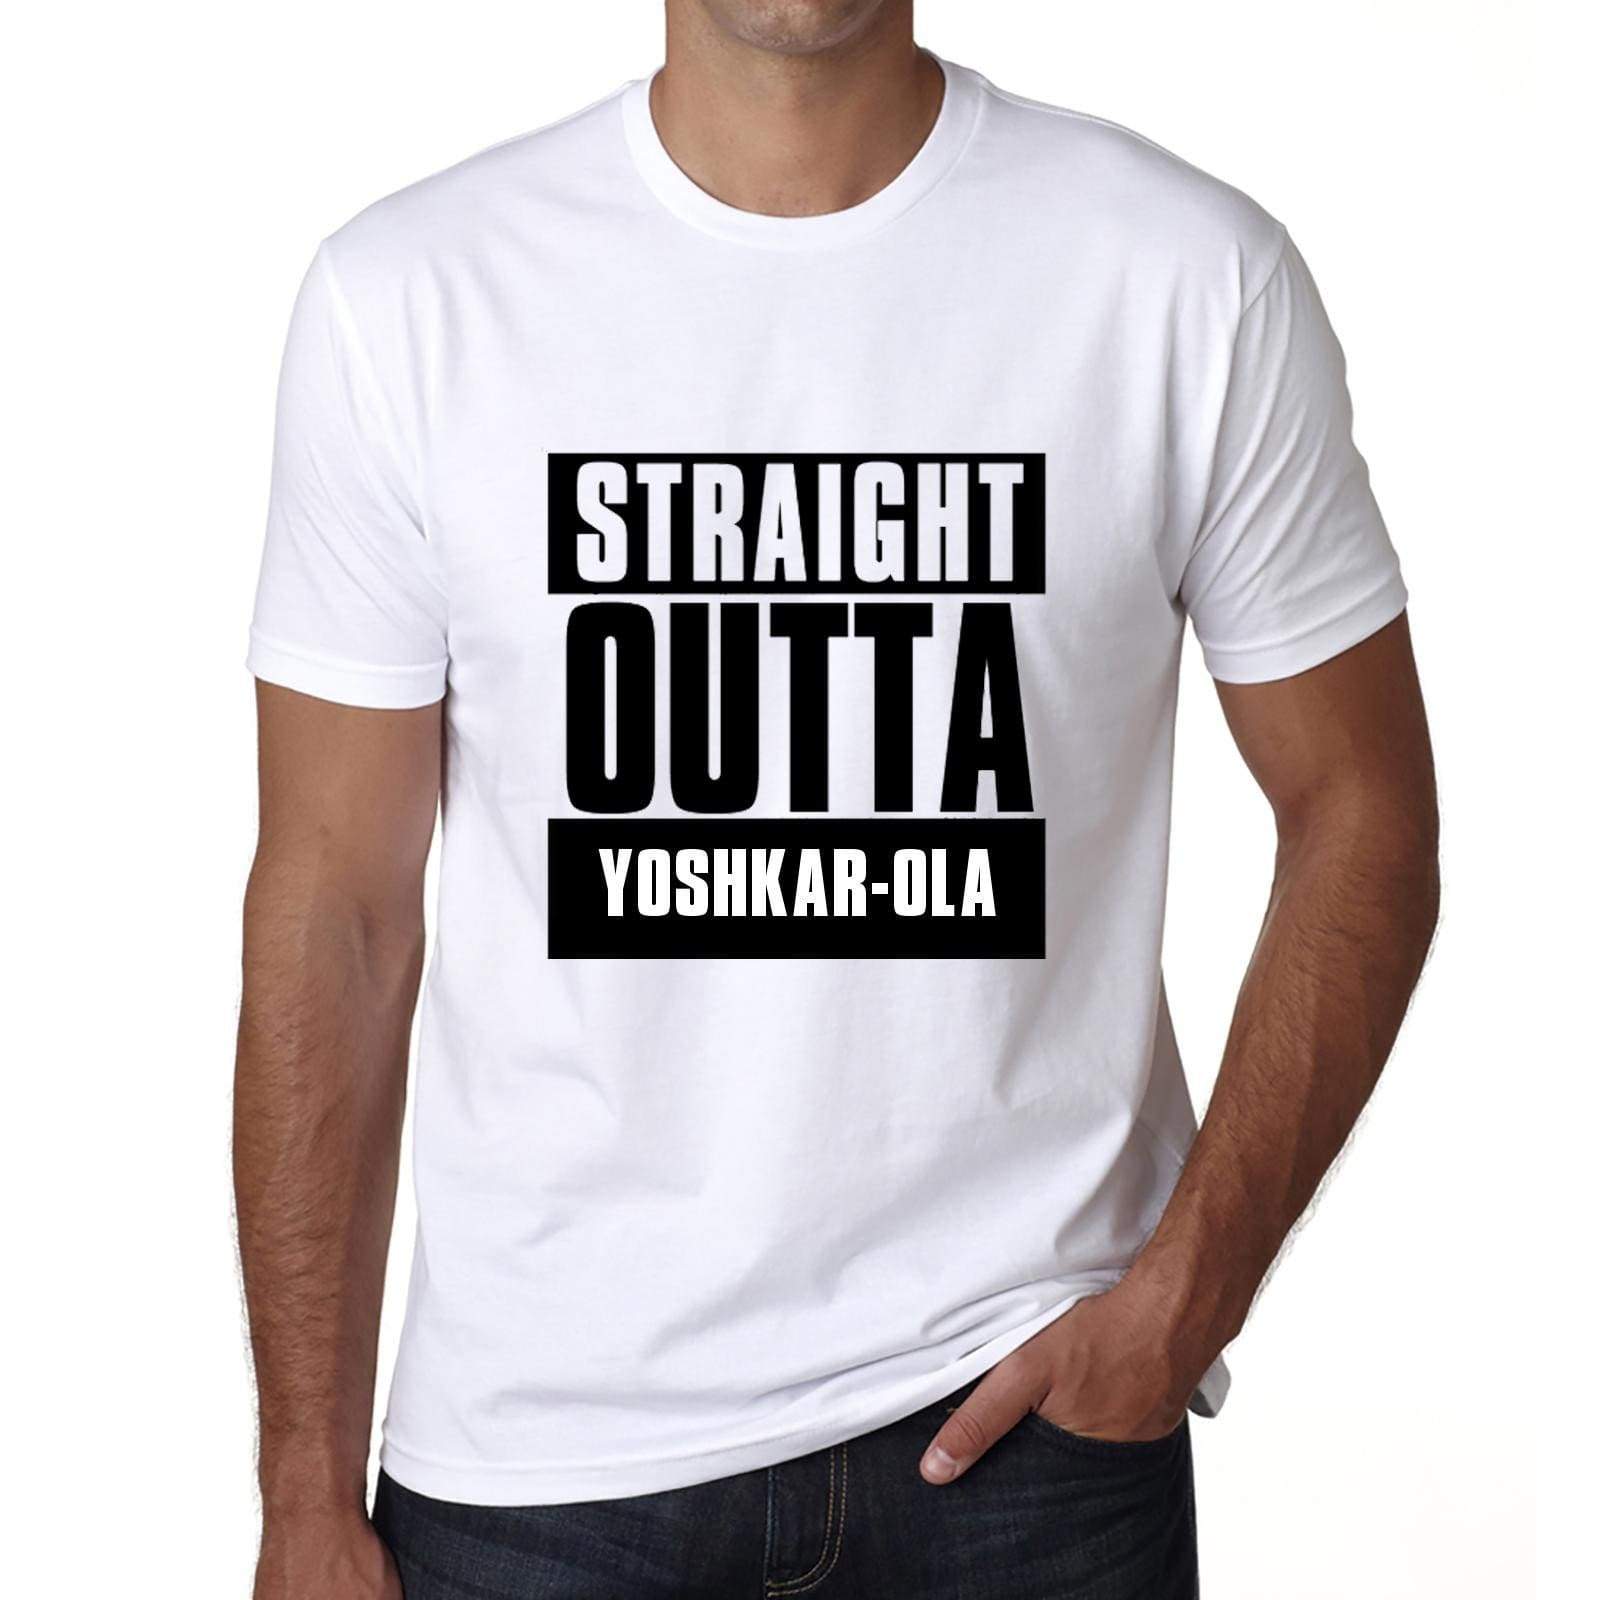 Straight Outta Yoshkar-Ola Mens Short Sleeve Round Neck T-Shirt 00027 - White / S - Casual